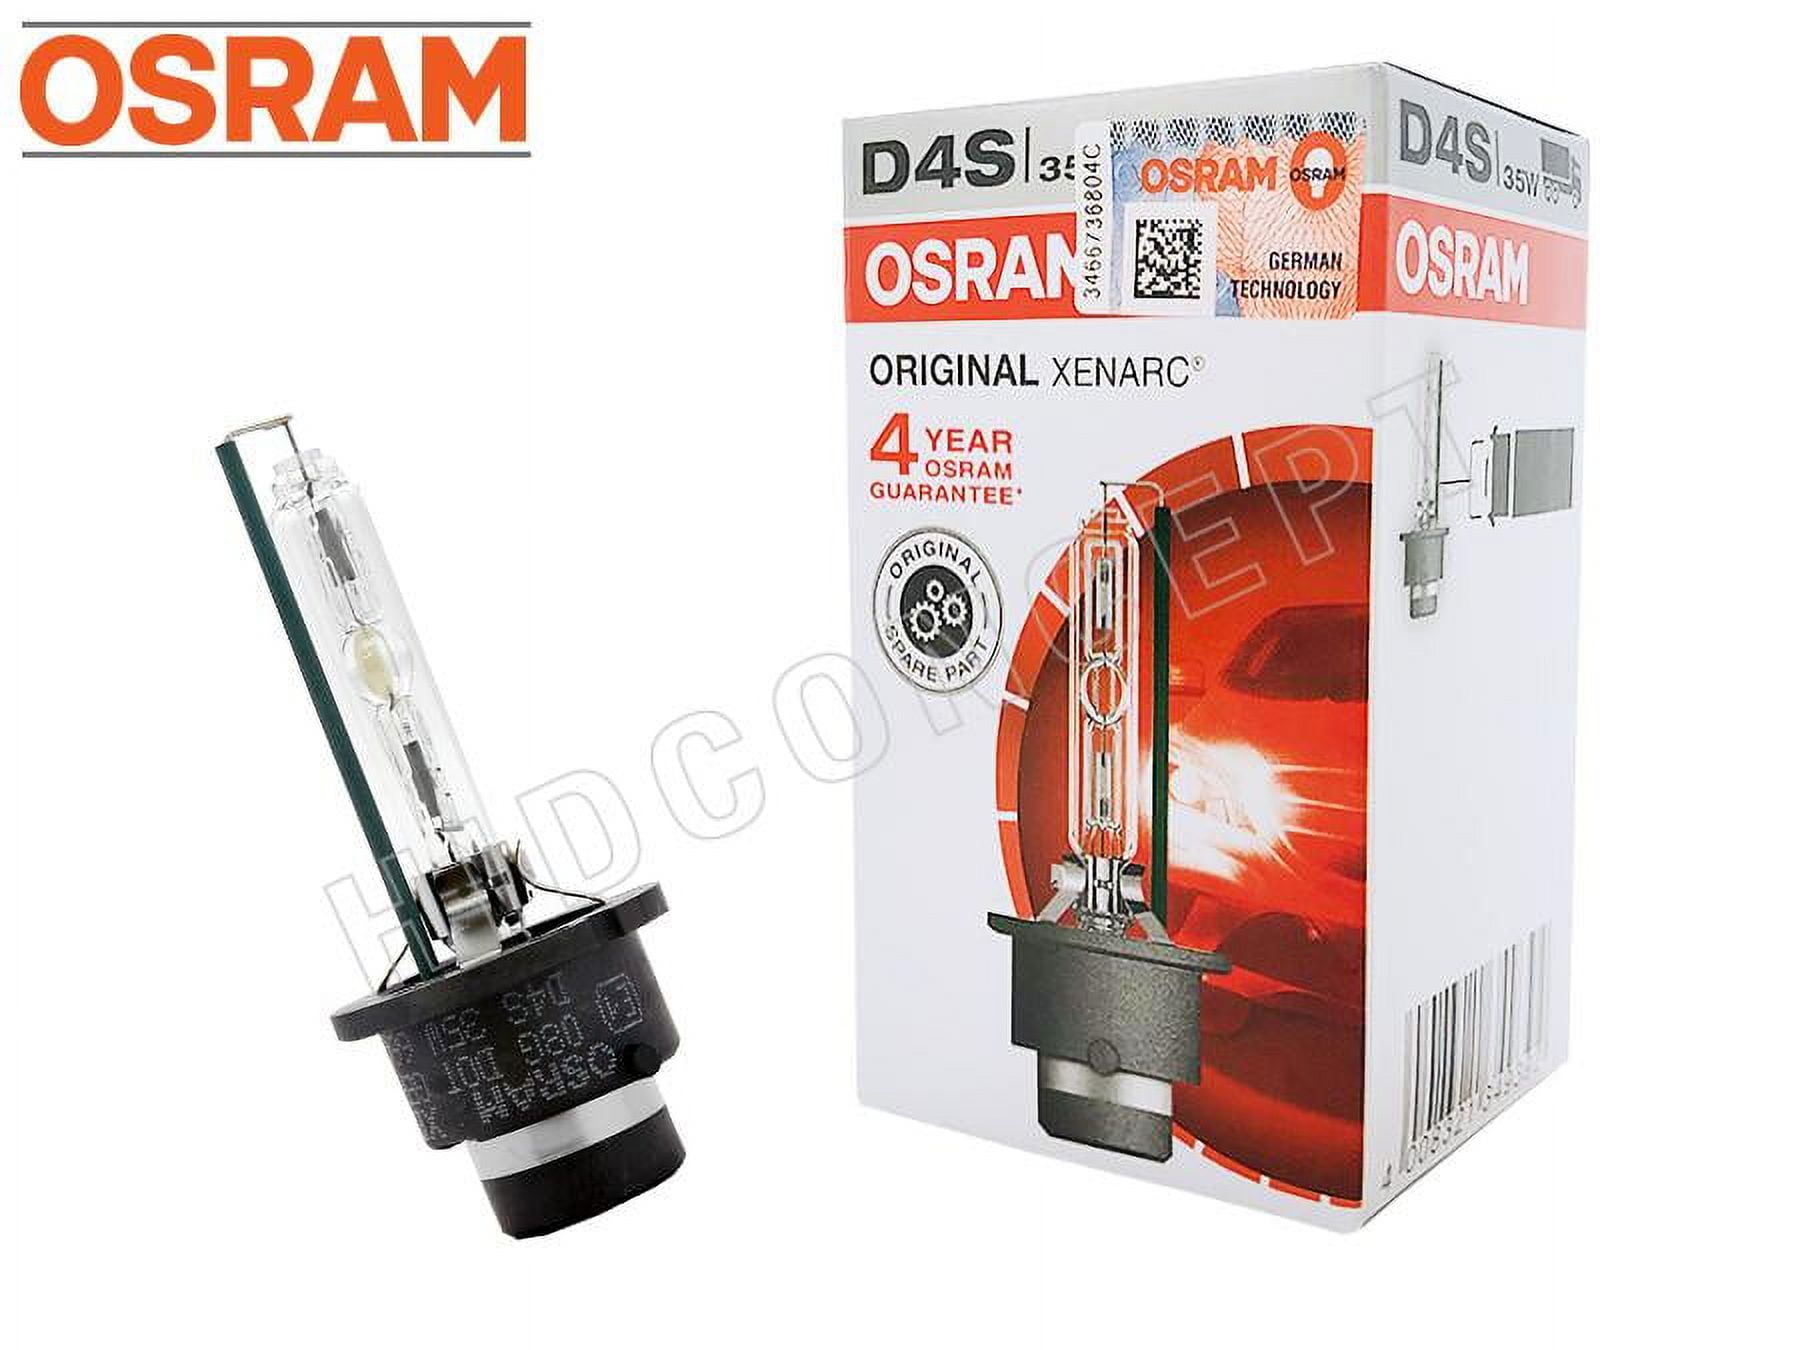 OSRAM D4S D4R PK32d-5 Xenon Bulb HID HeadLight Lamp Headlight